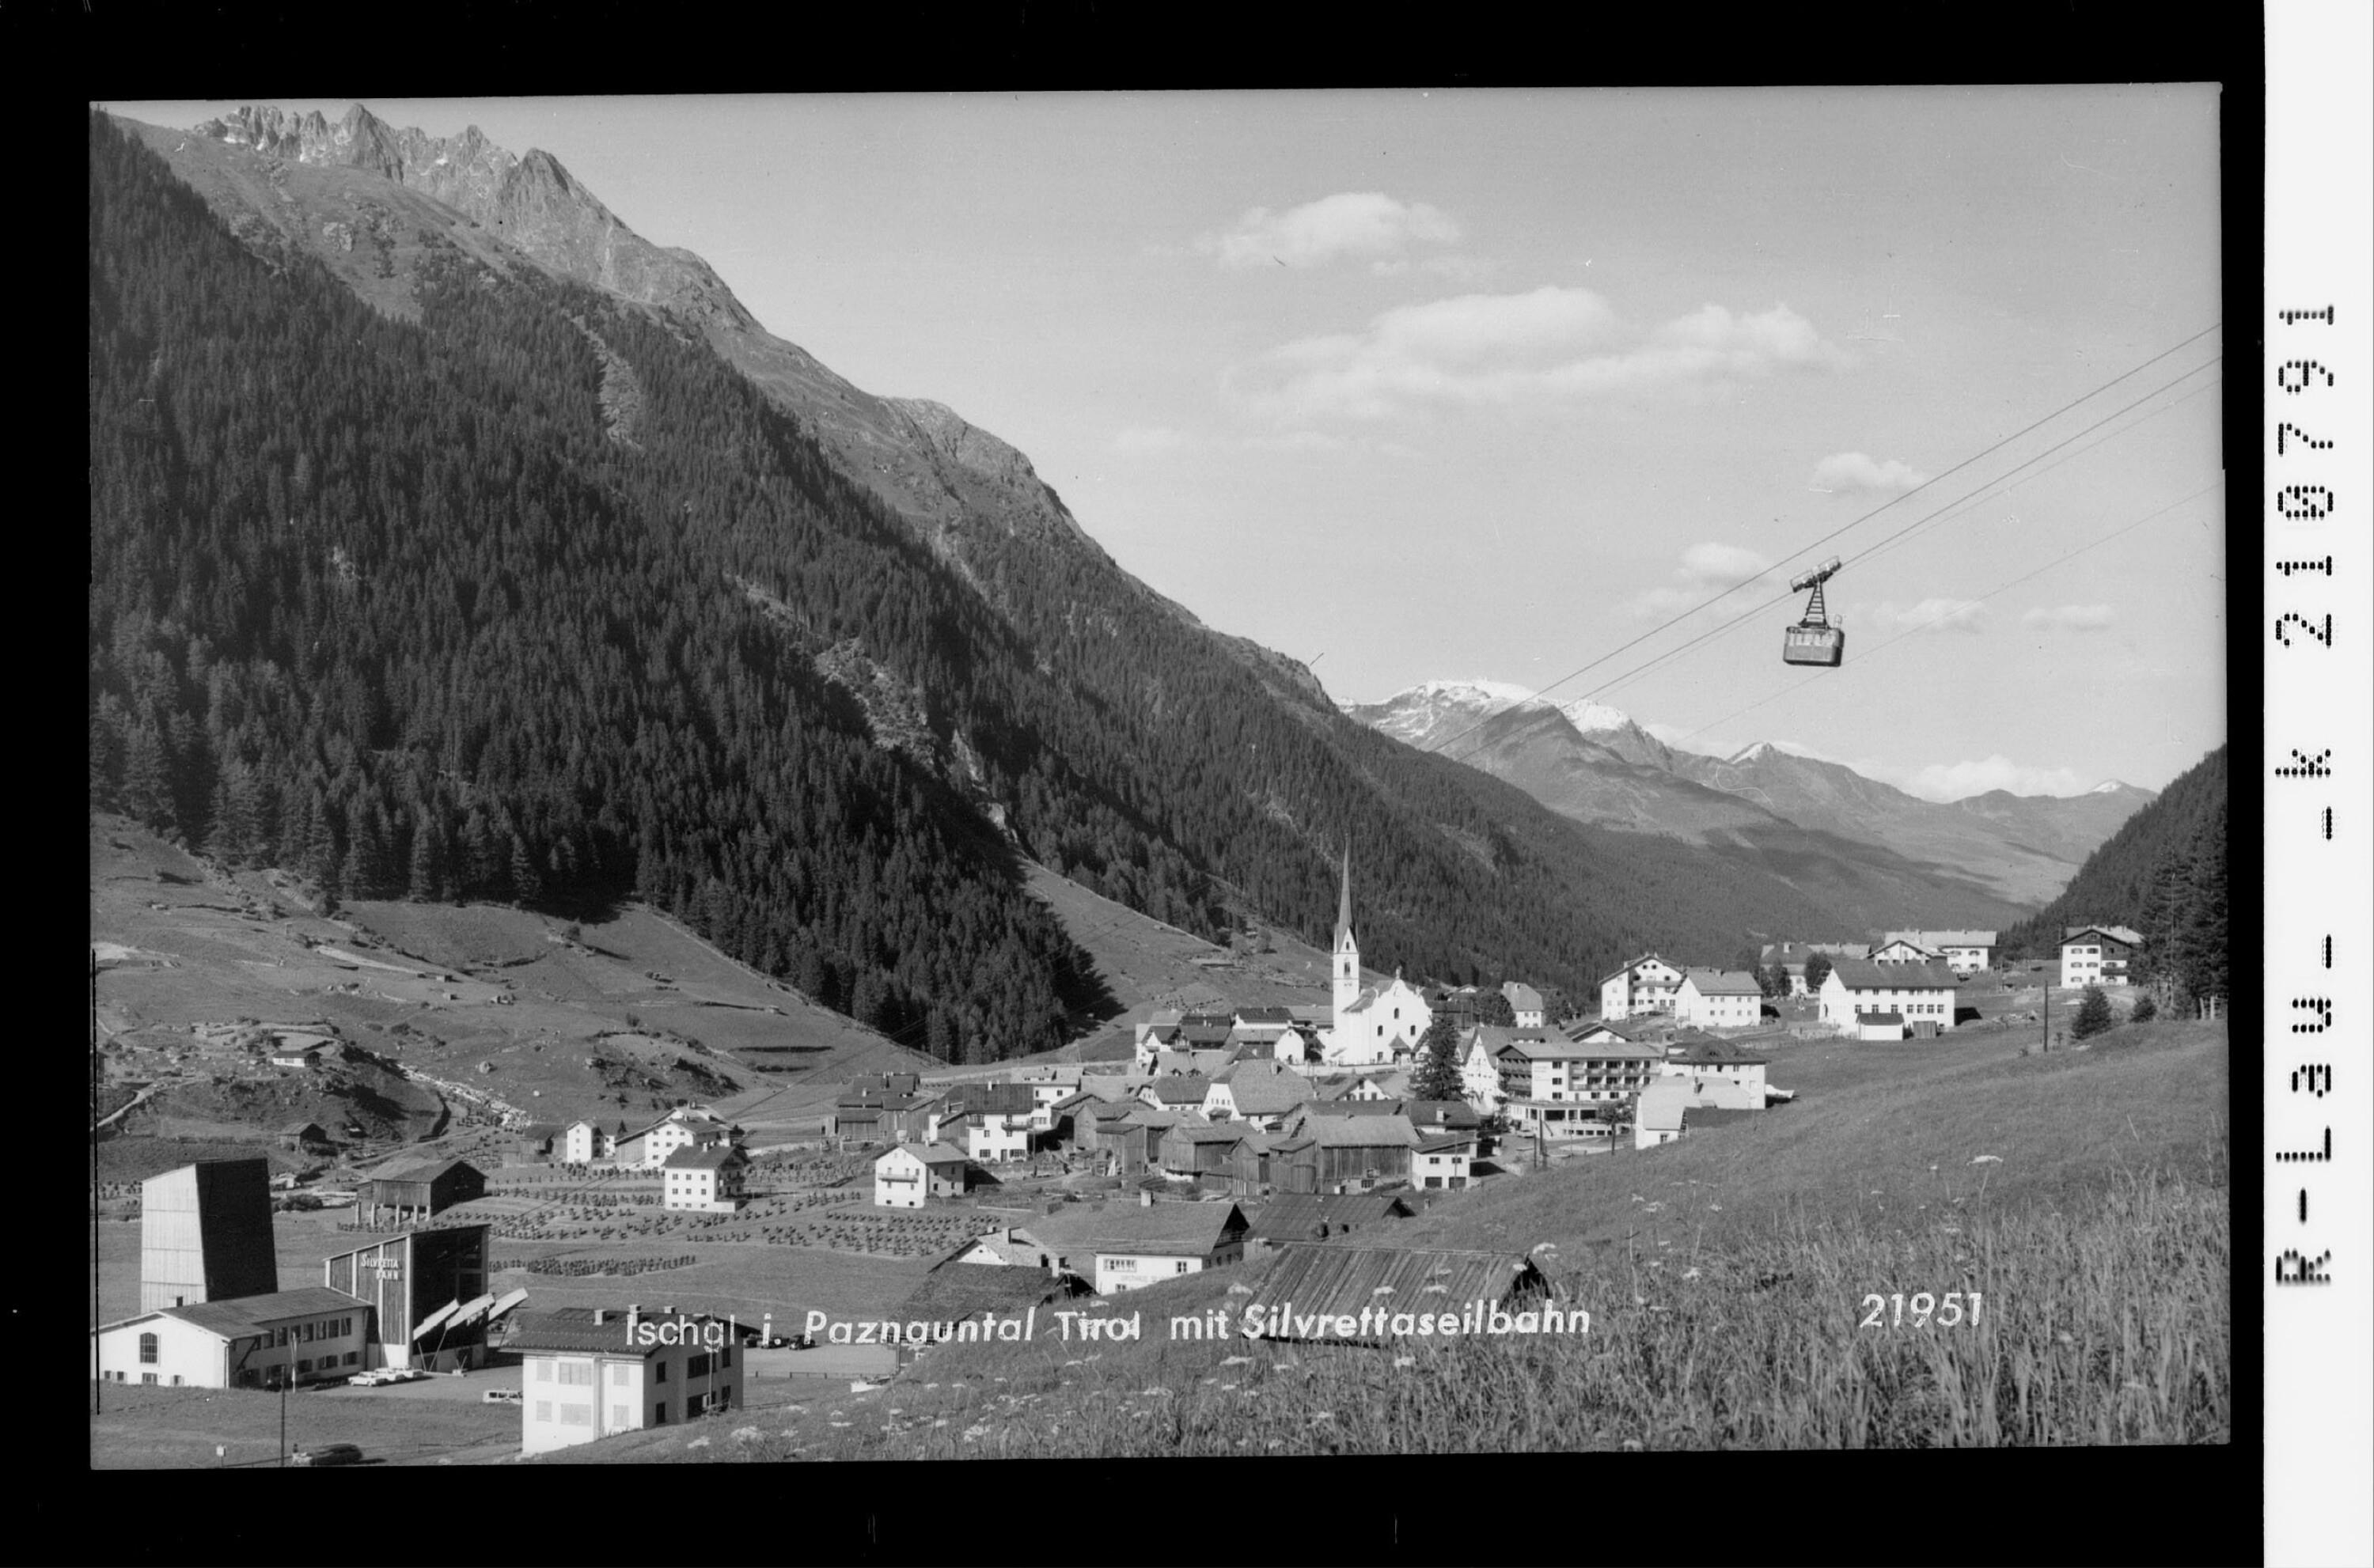 Ischgl im Paznauntal Tirol mit Silvrettaseilbahn></div>


    <hr>
    <div class=